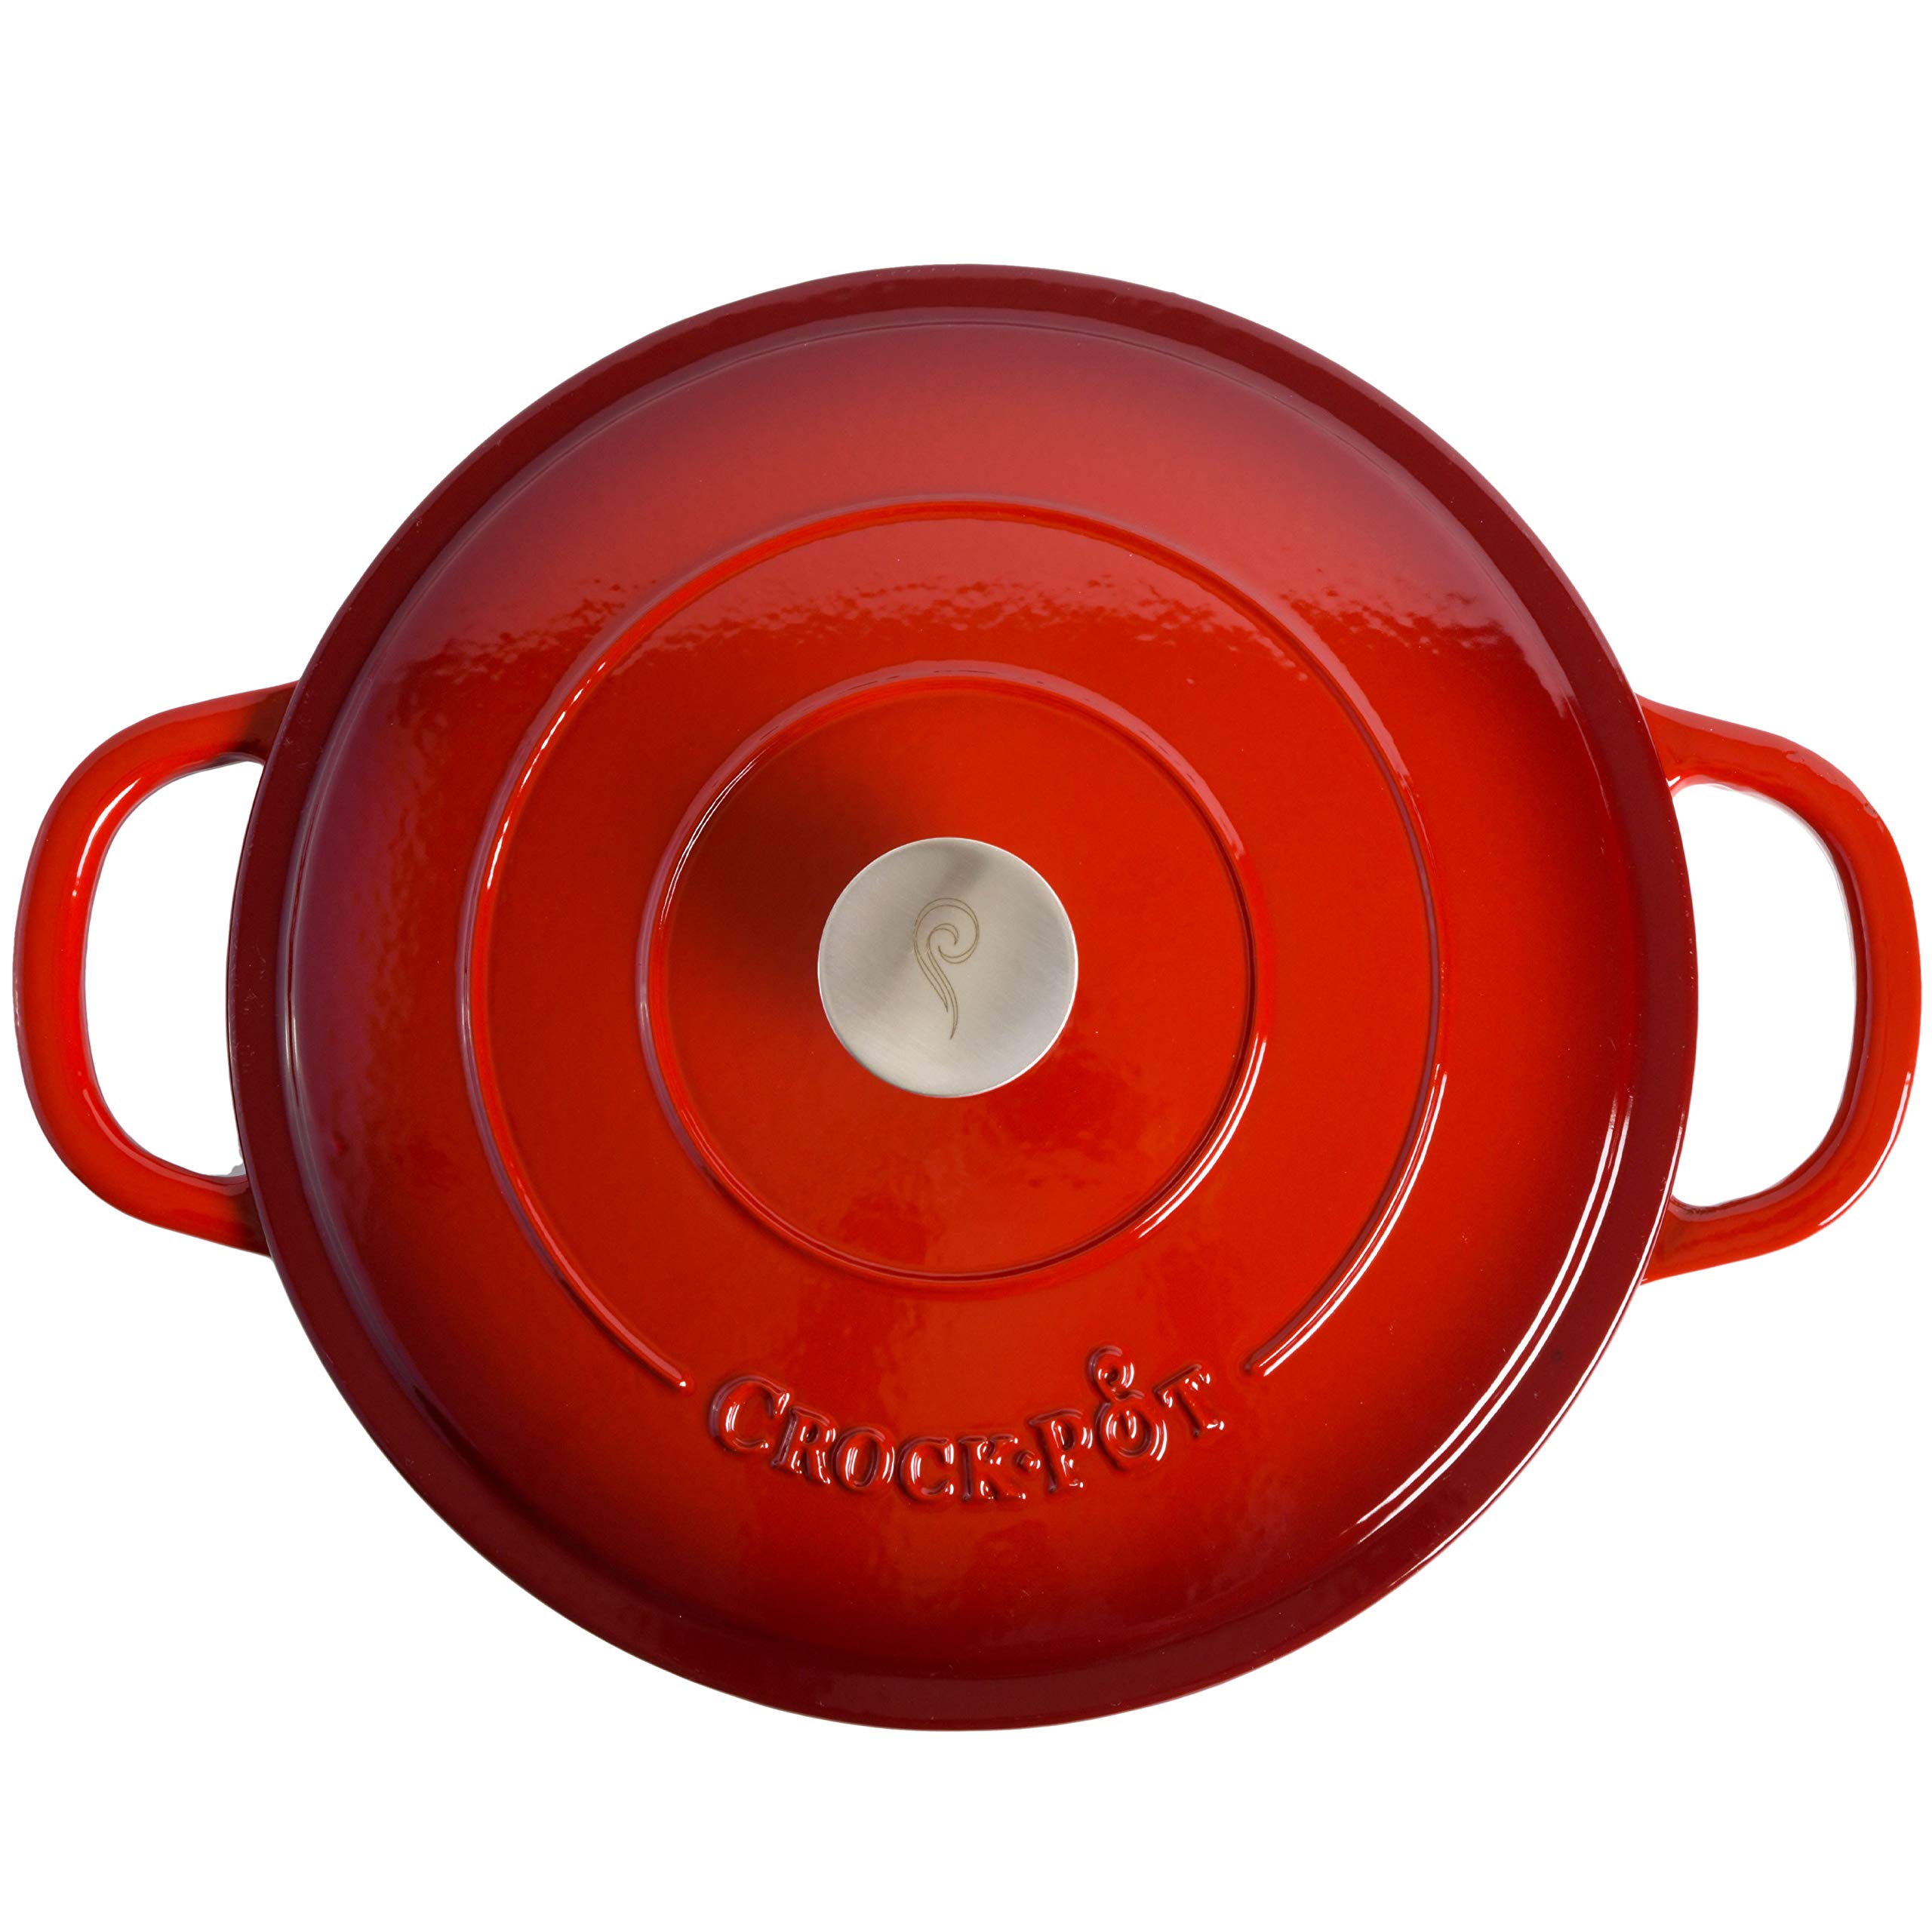 Crock Pot Artisan Enameled Cast Iron Braiser W/Lid, 5 Quart, Scarlet Red